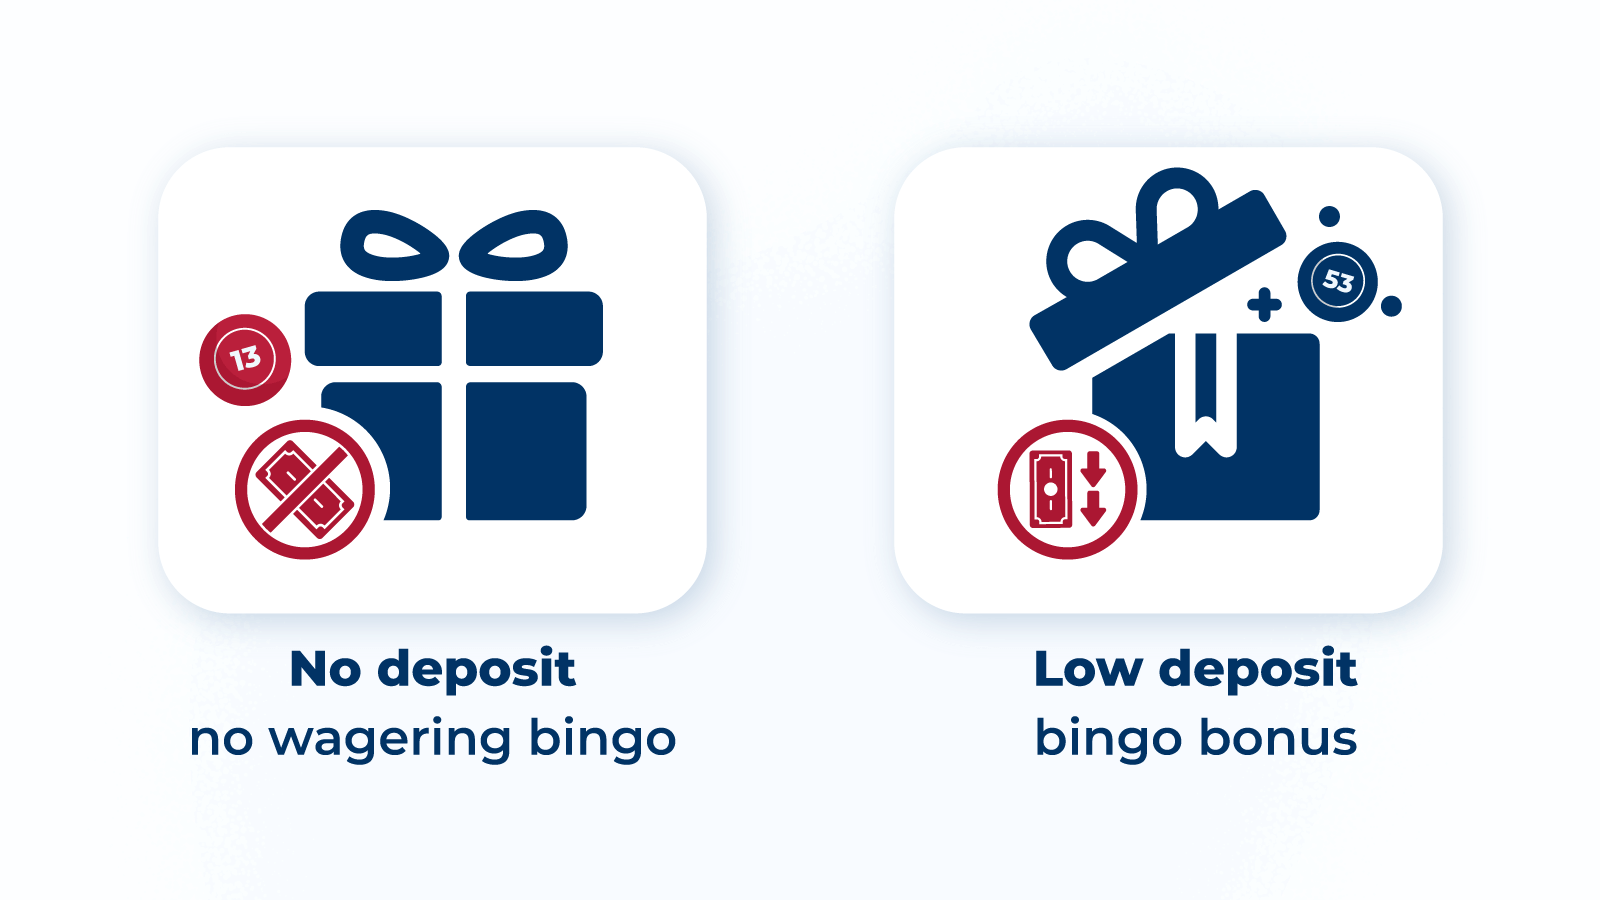 More Free Bingo Options at KingCasinoBonus